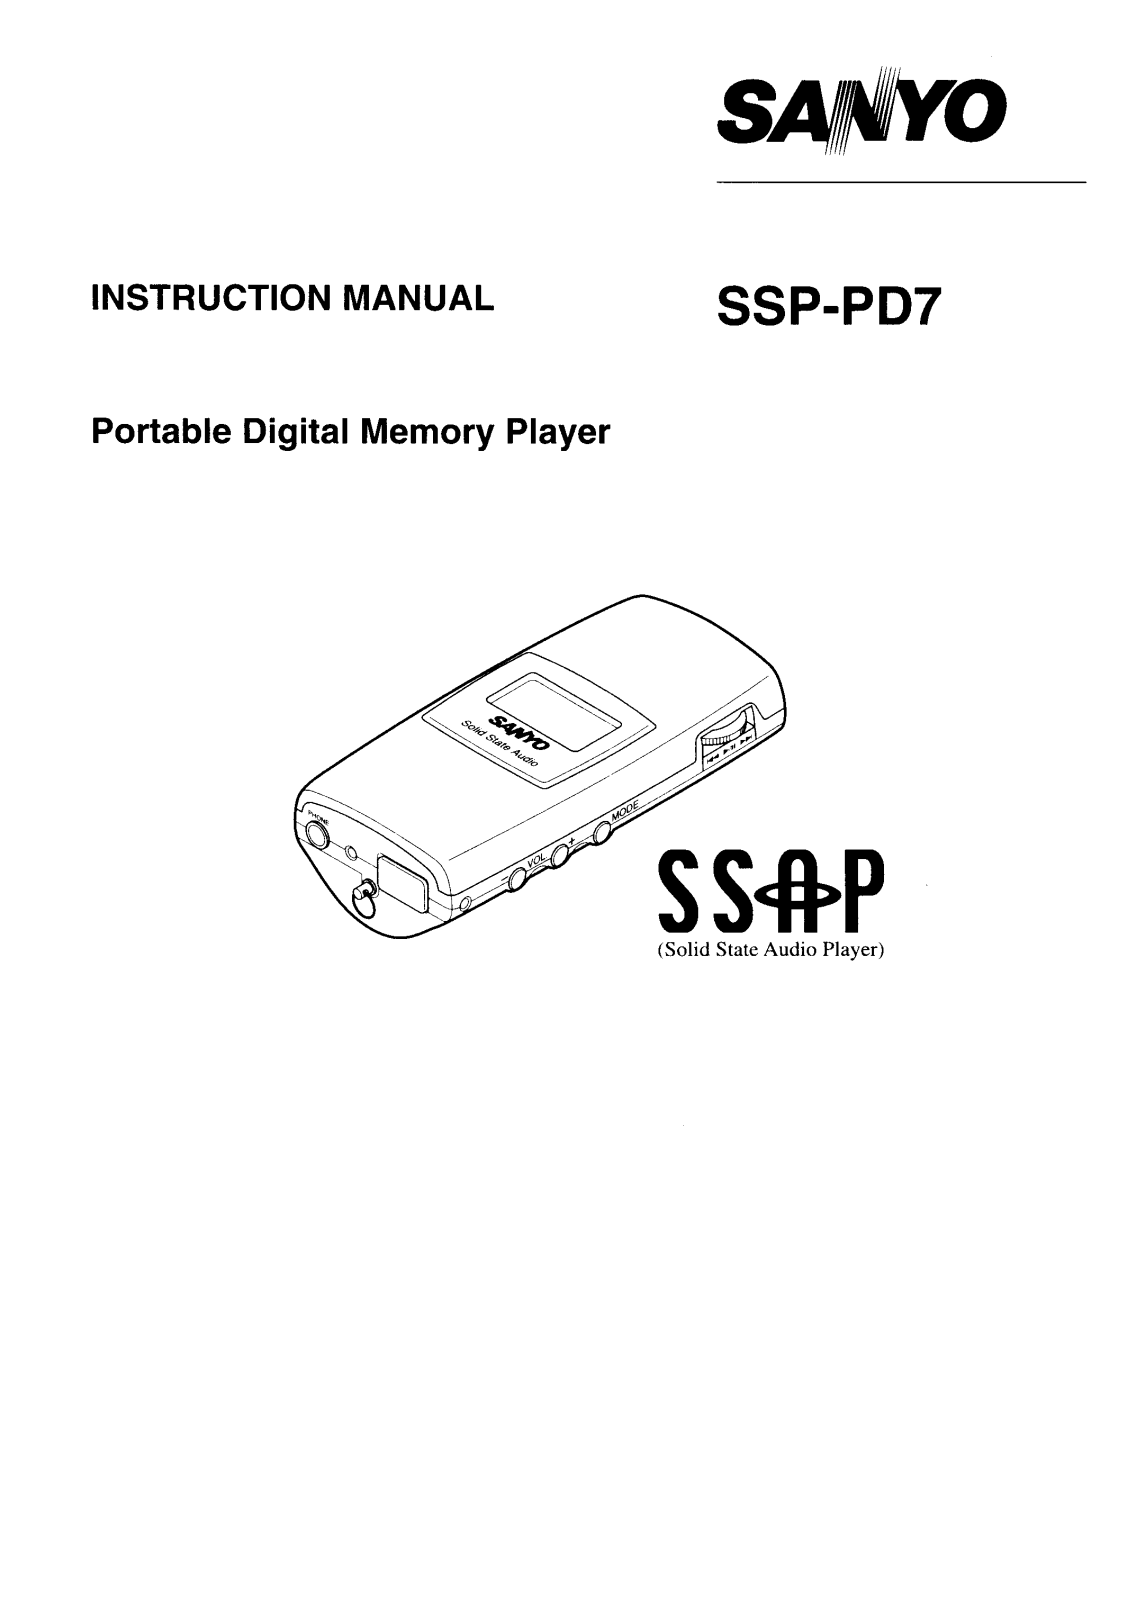 Sanyo SSP-PD7 Instruction Manual